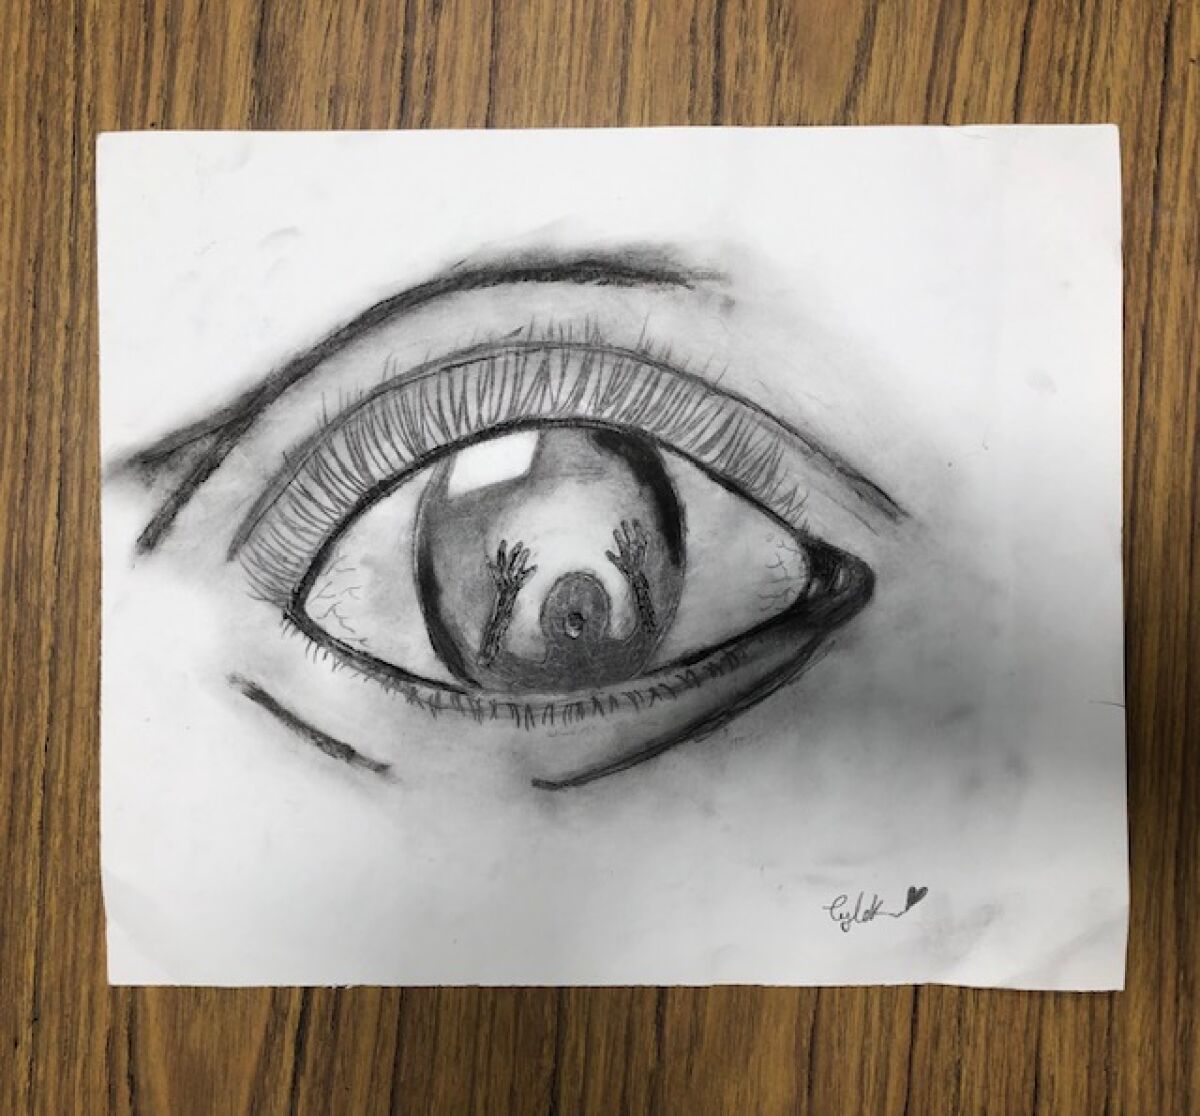 Tyler, 13, said she likes drawing eyeballs.